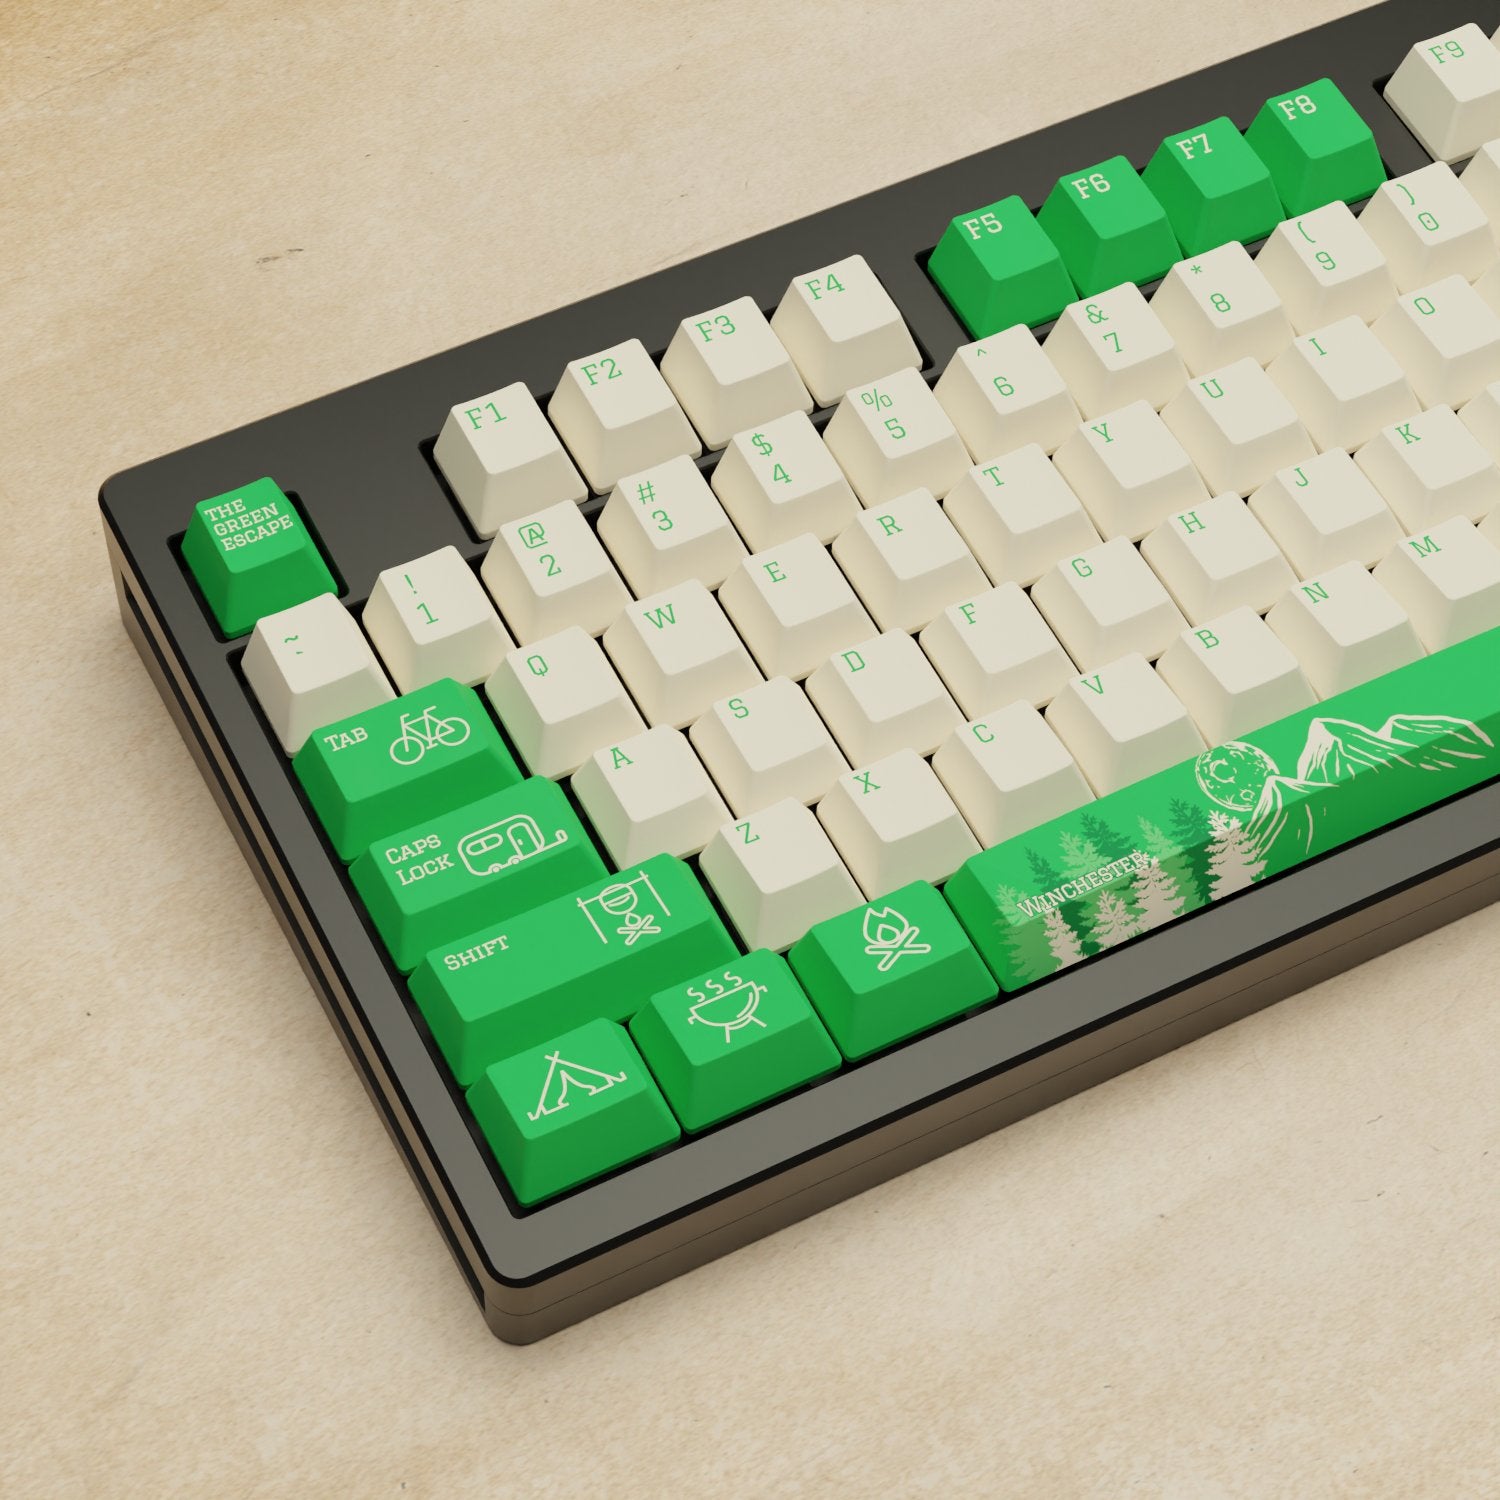 Monsgeek M5 - 100% Outdoor Mechanical Keyboard - Goblintechkeys